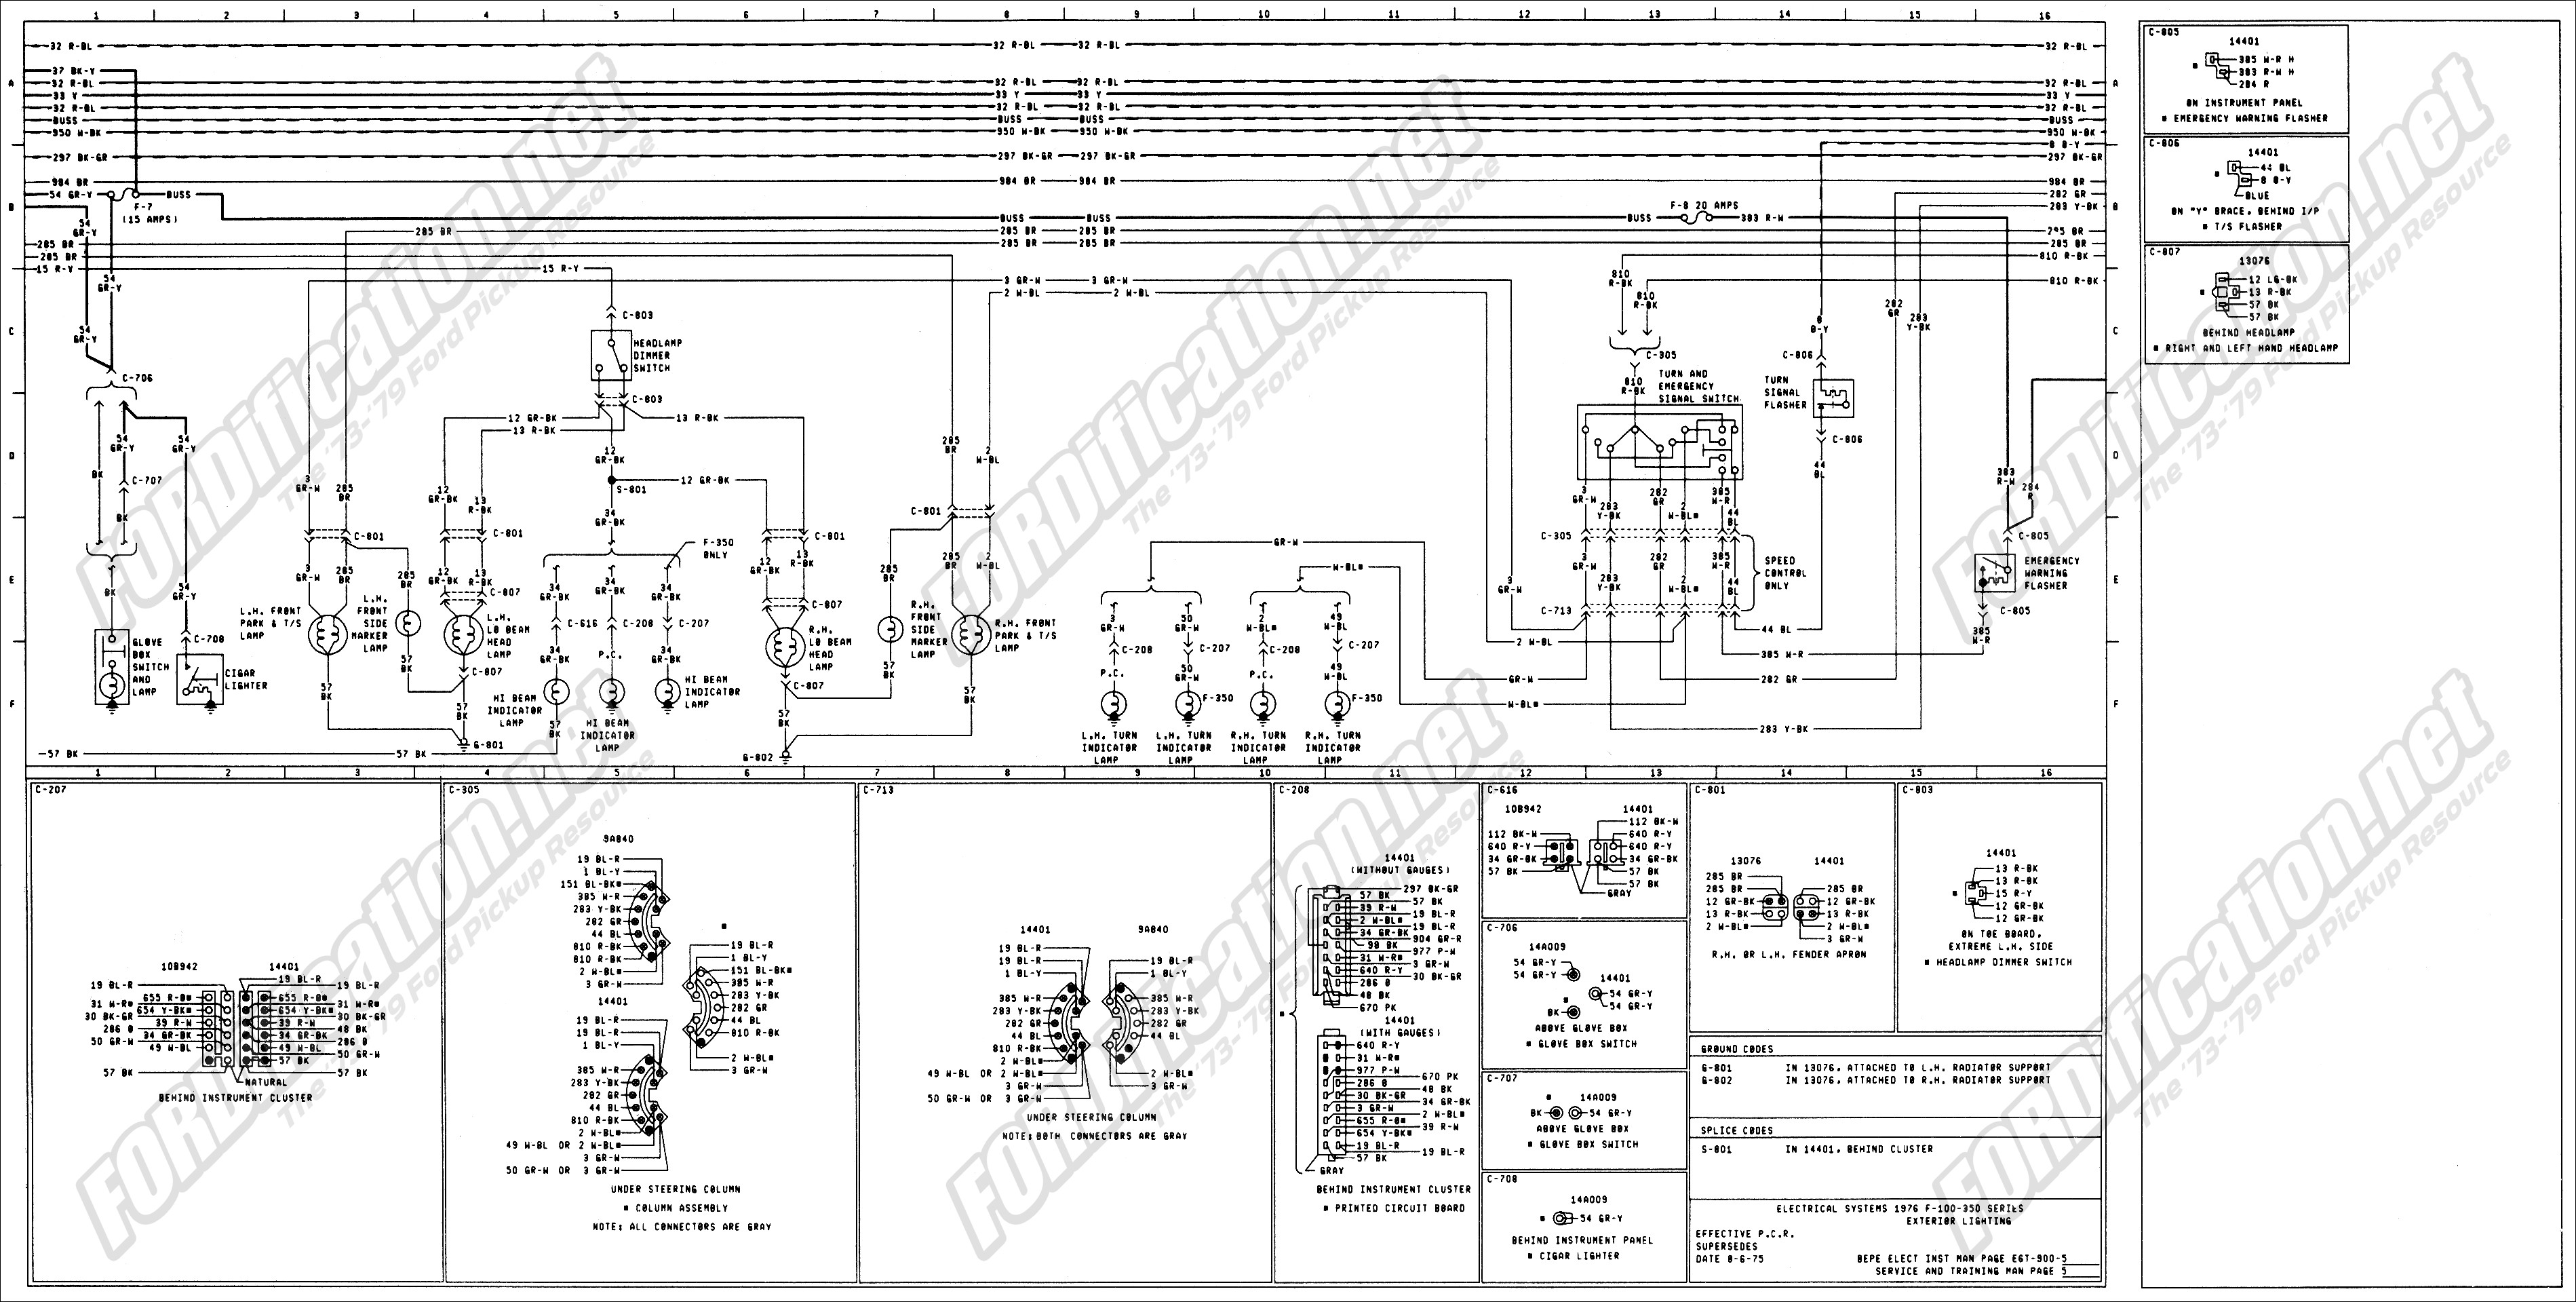 Turn Signal Wiring Schematic Diagram 1973 1979 ford Truck Wiring Diagrams & Schematics fordification Of Turn Signal Wiring Schematic Diagram